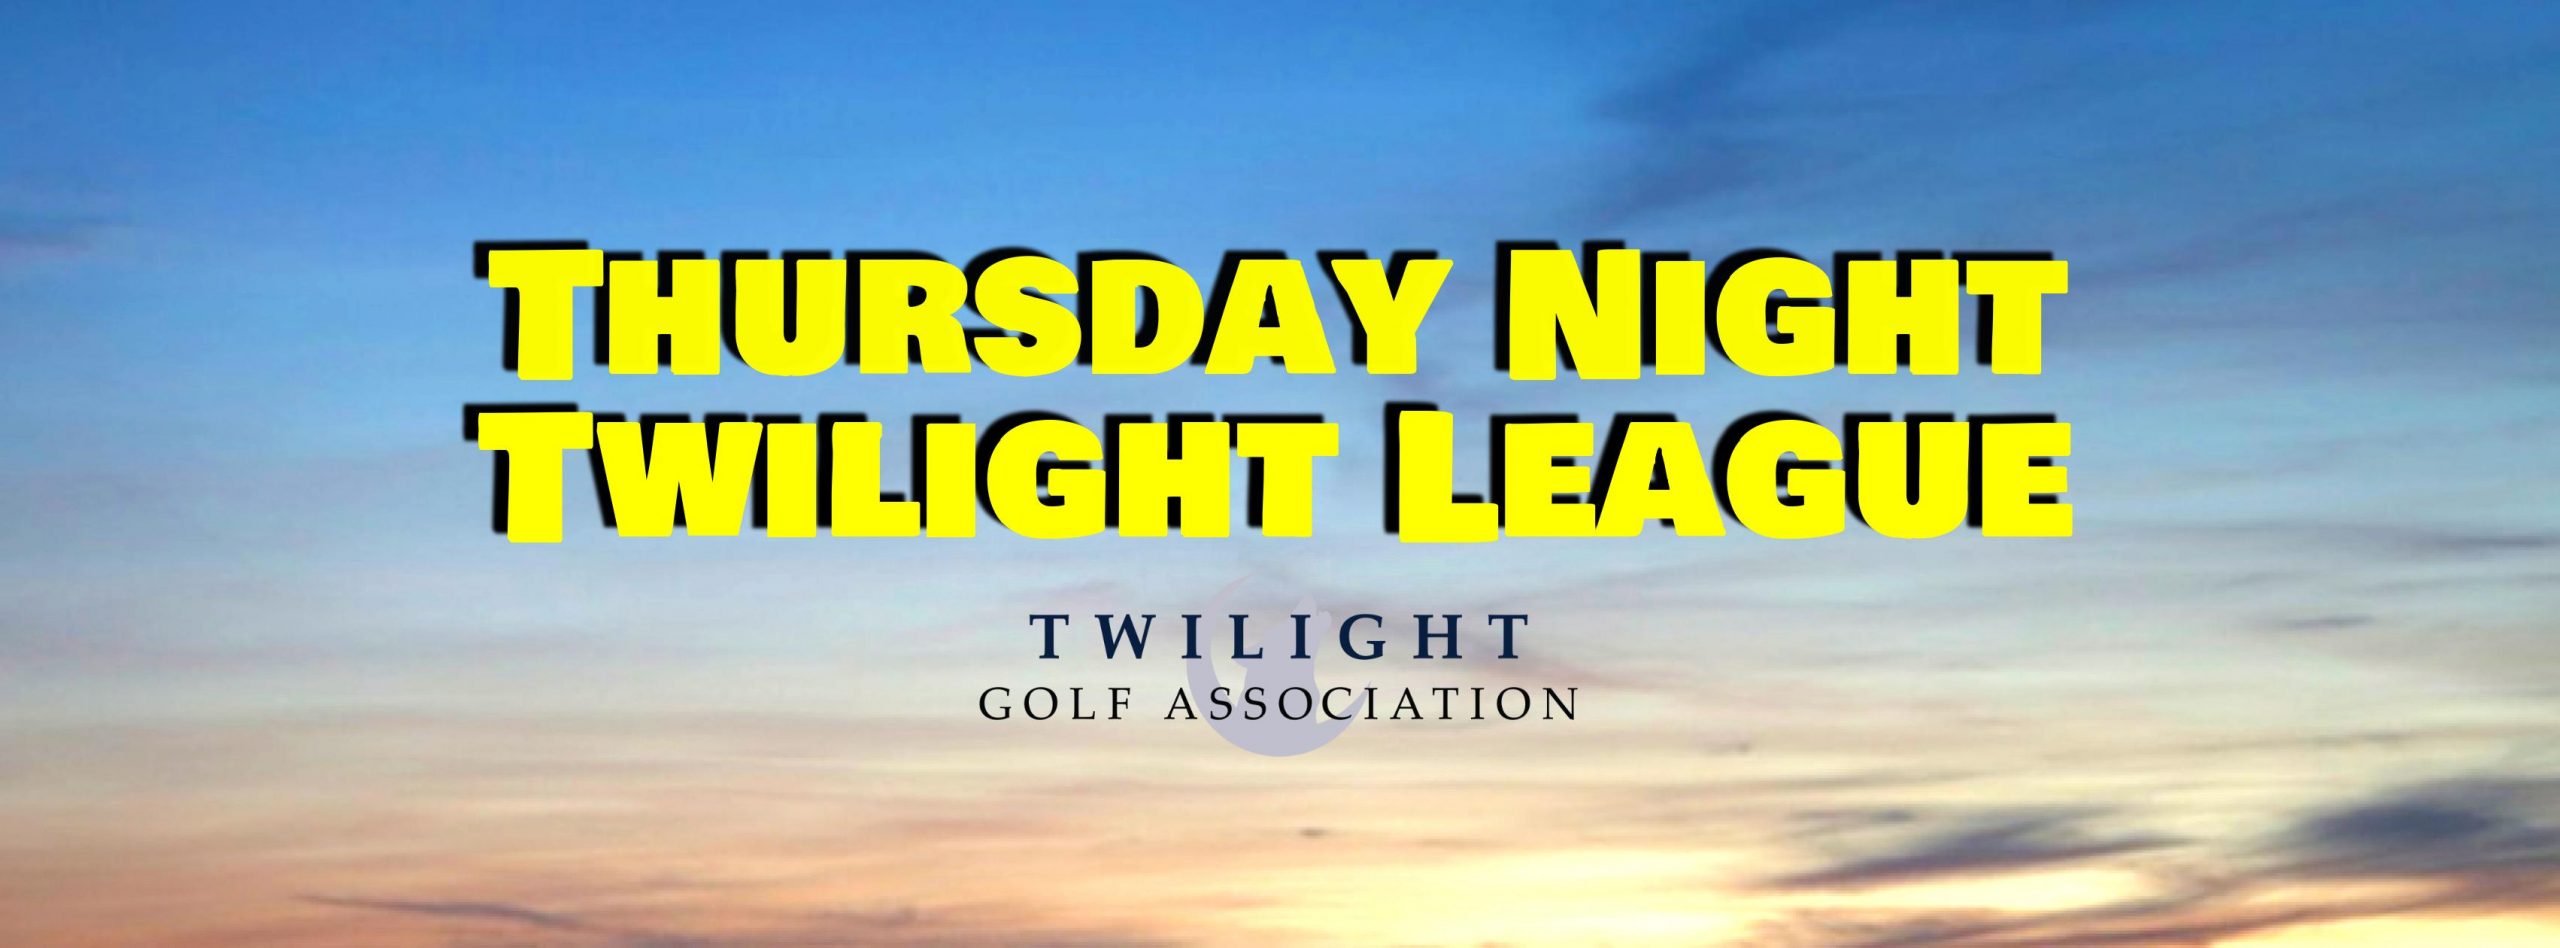 Thursday Twilight League at Ken McDonald Golf Course